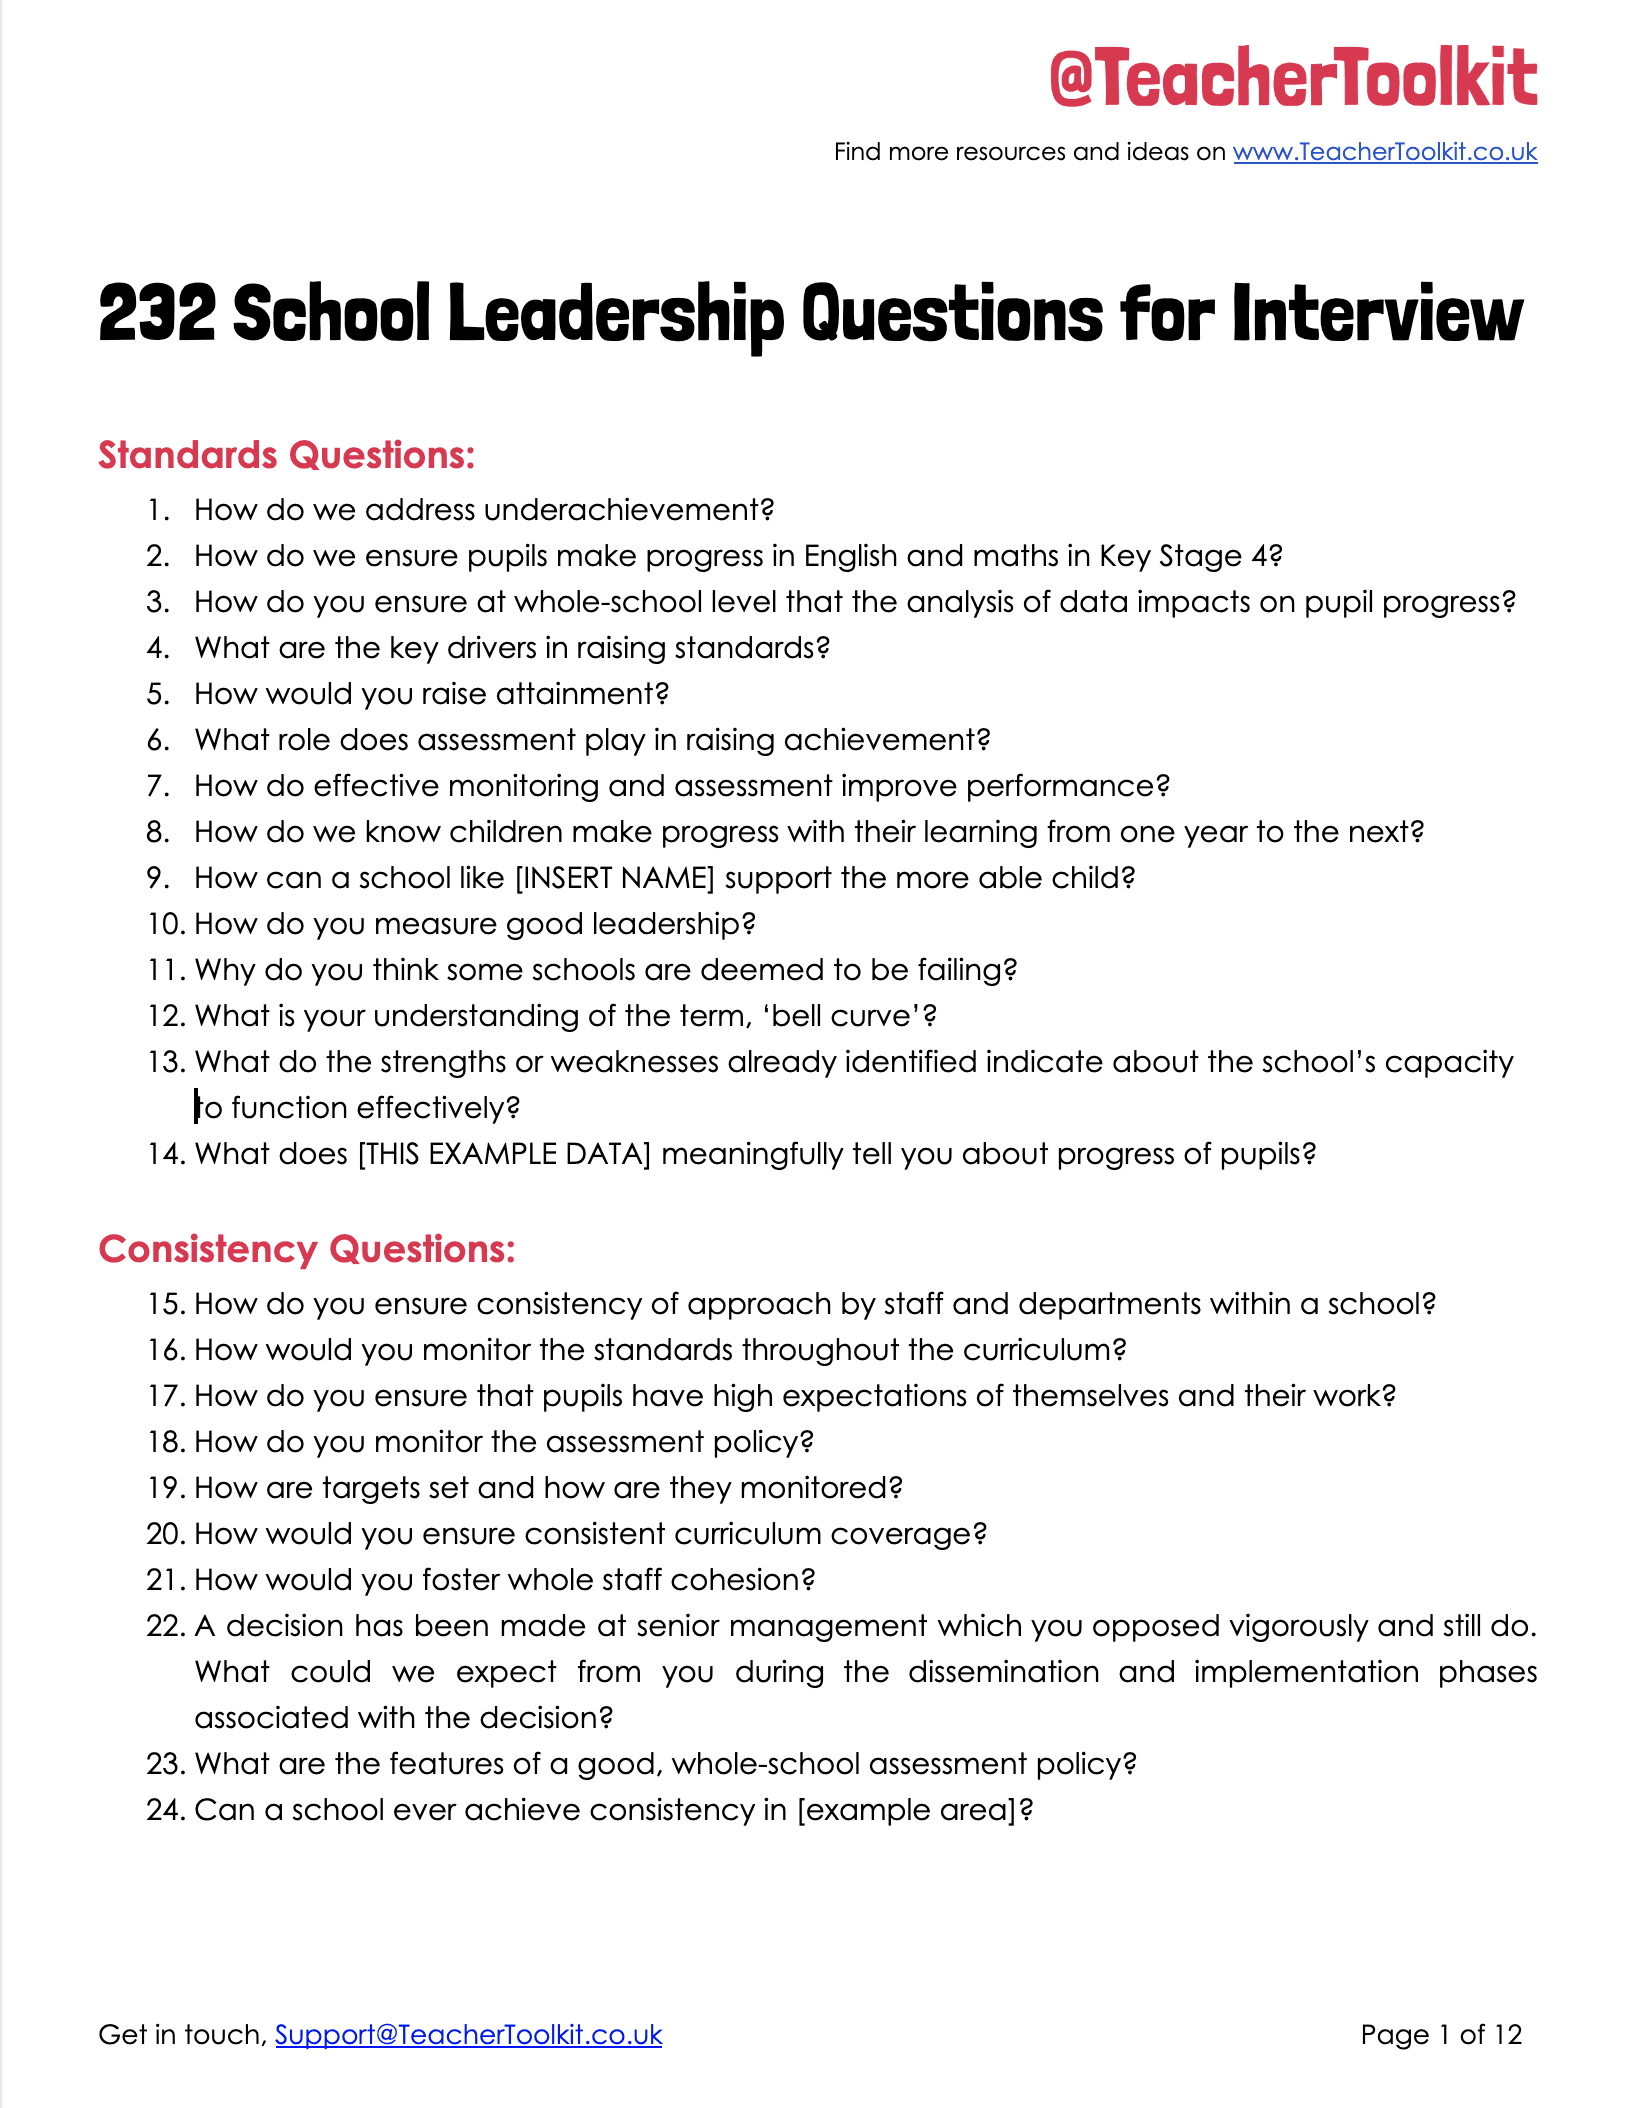 232-school-leadership-questions-teachertoolkit